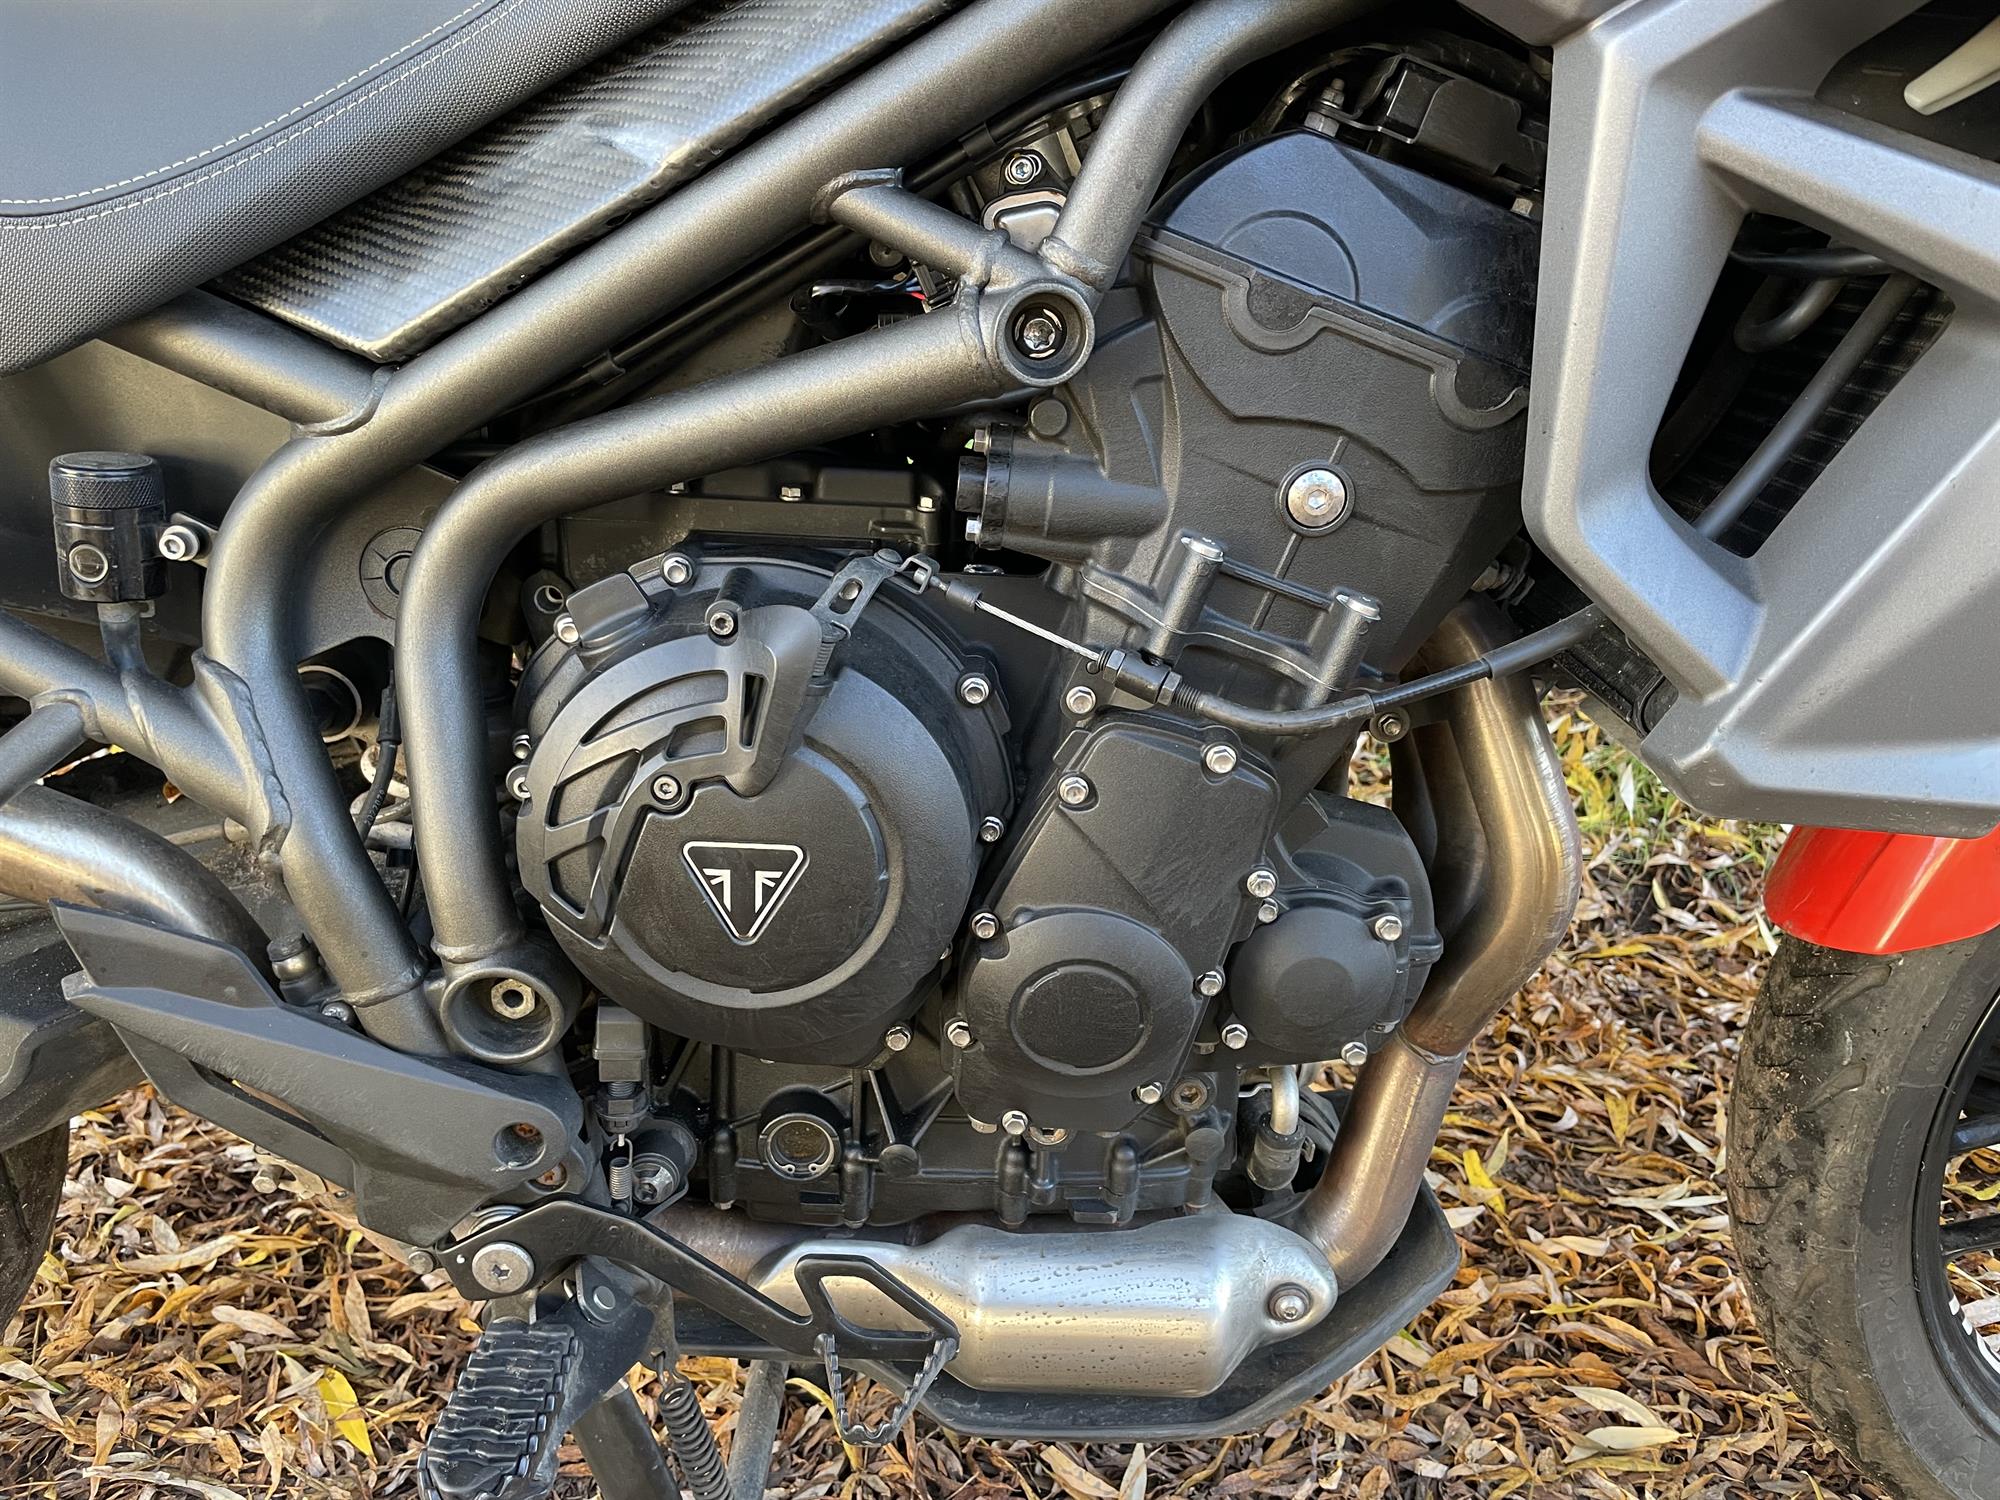 2015 Triumph Tiger 800 XRT 800cc - Image 3 of 10